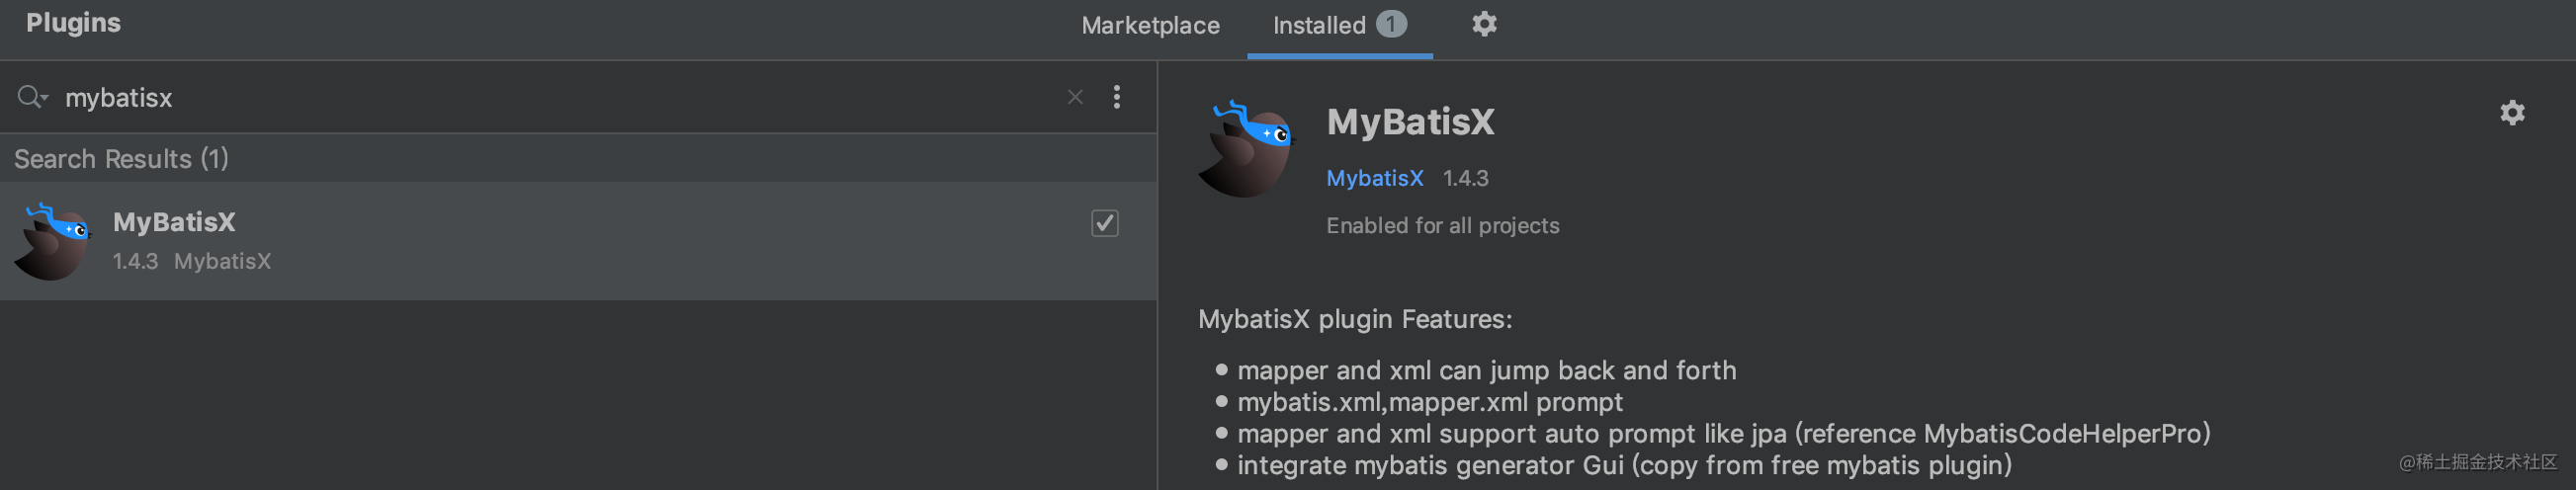 MyBatisX